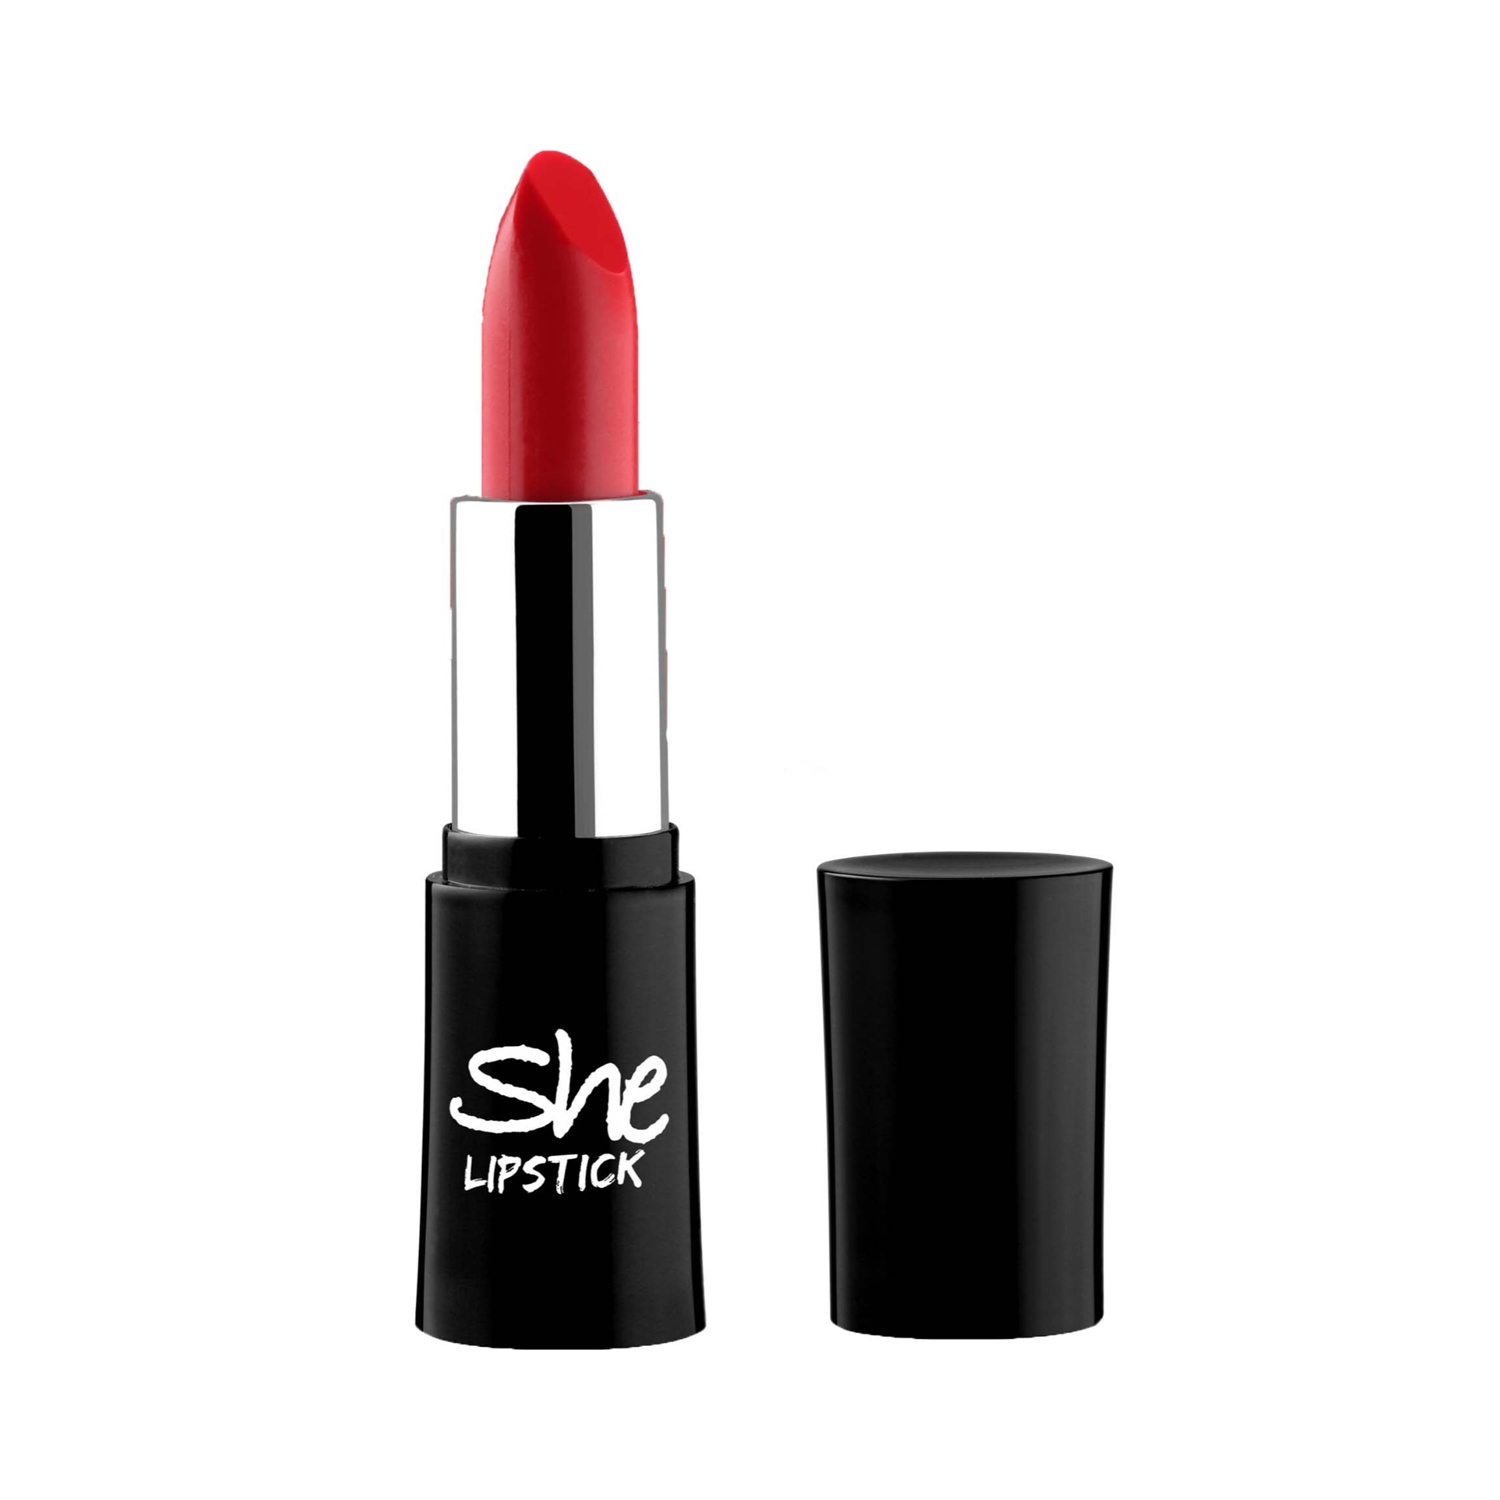 She | She Makeup Lipstick - 08 Fiery Red (4.5g)